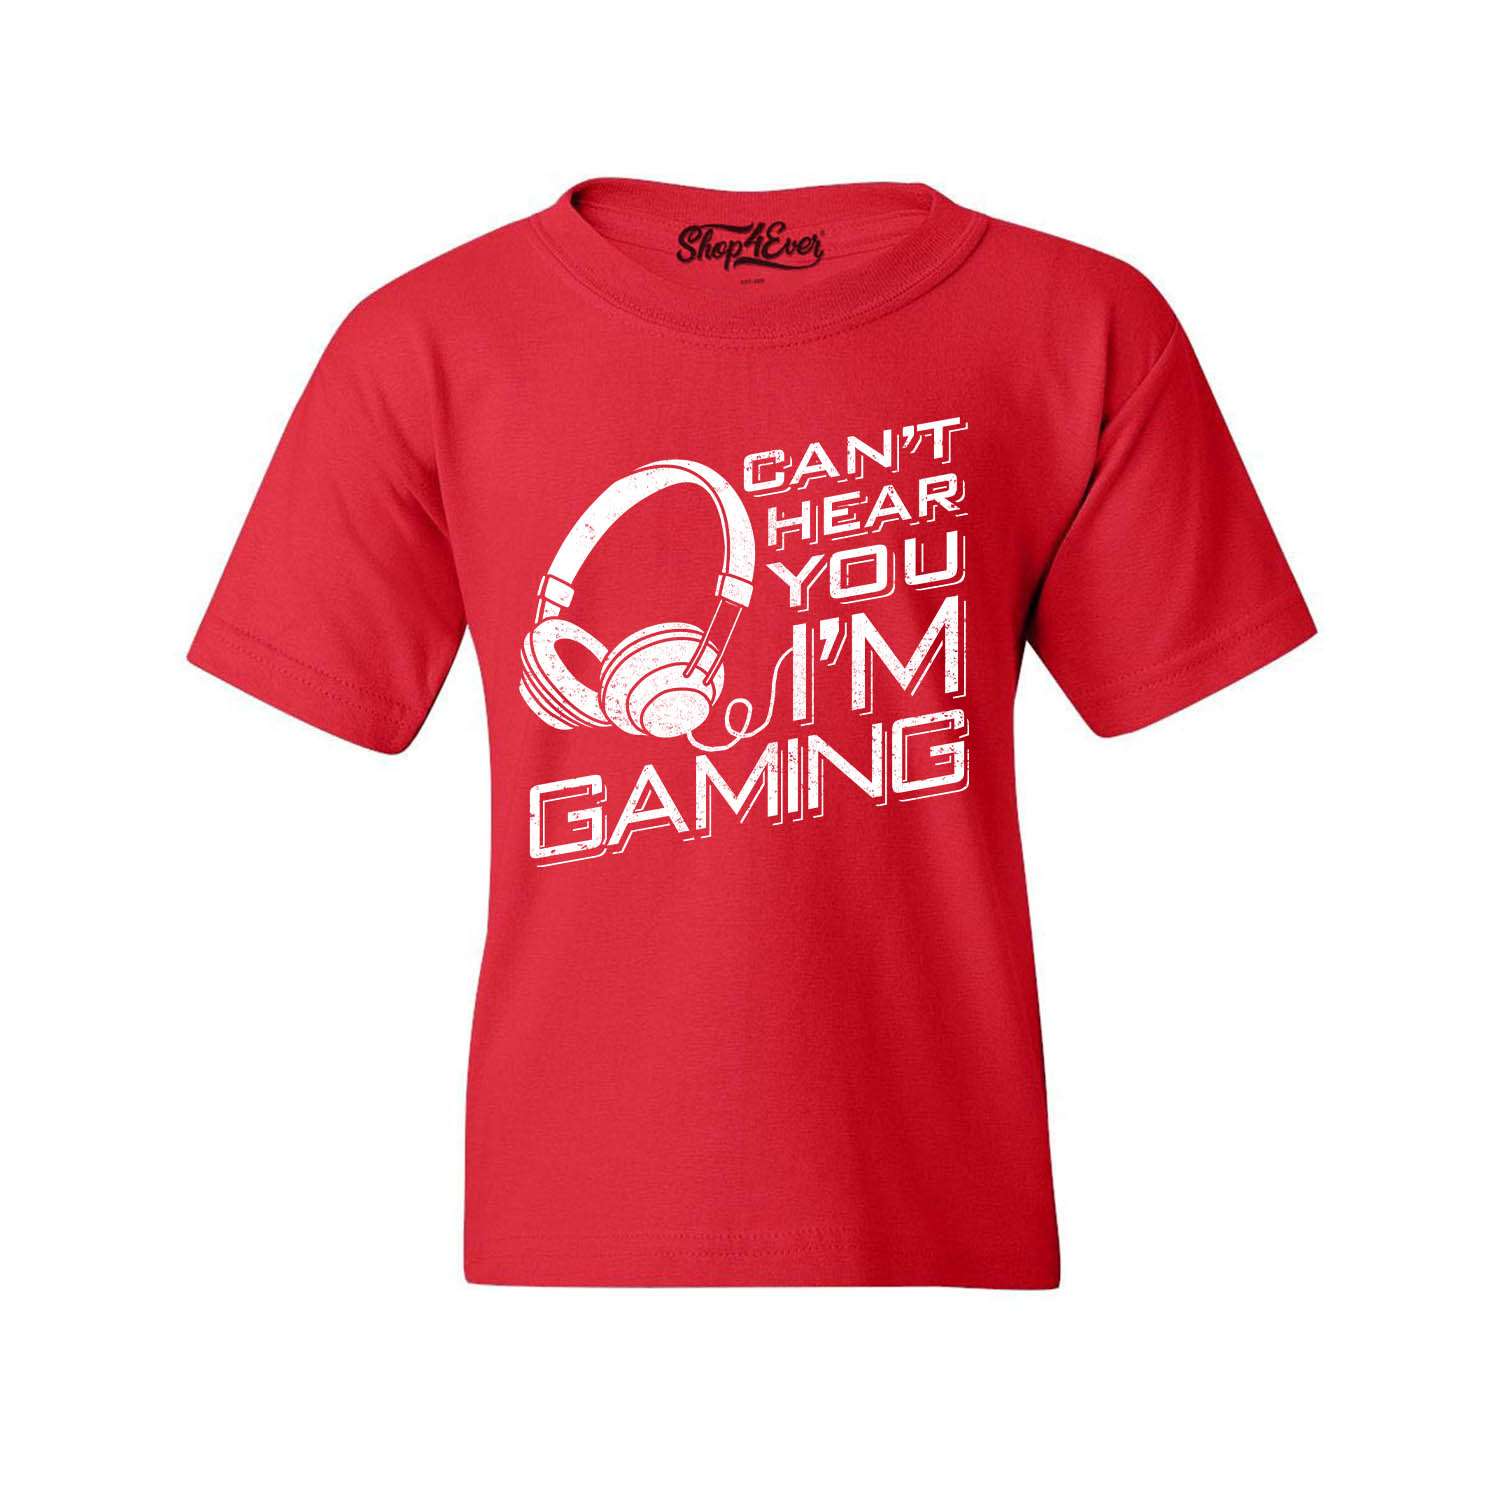 Kids Gaming Shirt I'm Gaming Shirt I Can't Hear You I'm Gaming Shirt Gamer Shirt Game All Day Video Game Shirt Video Game Party Shirt